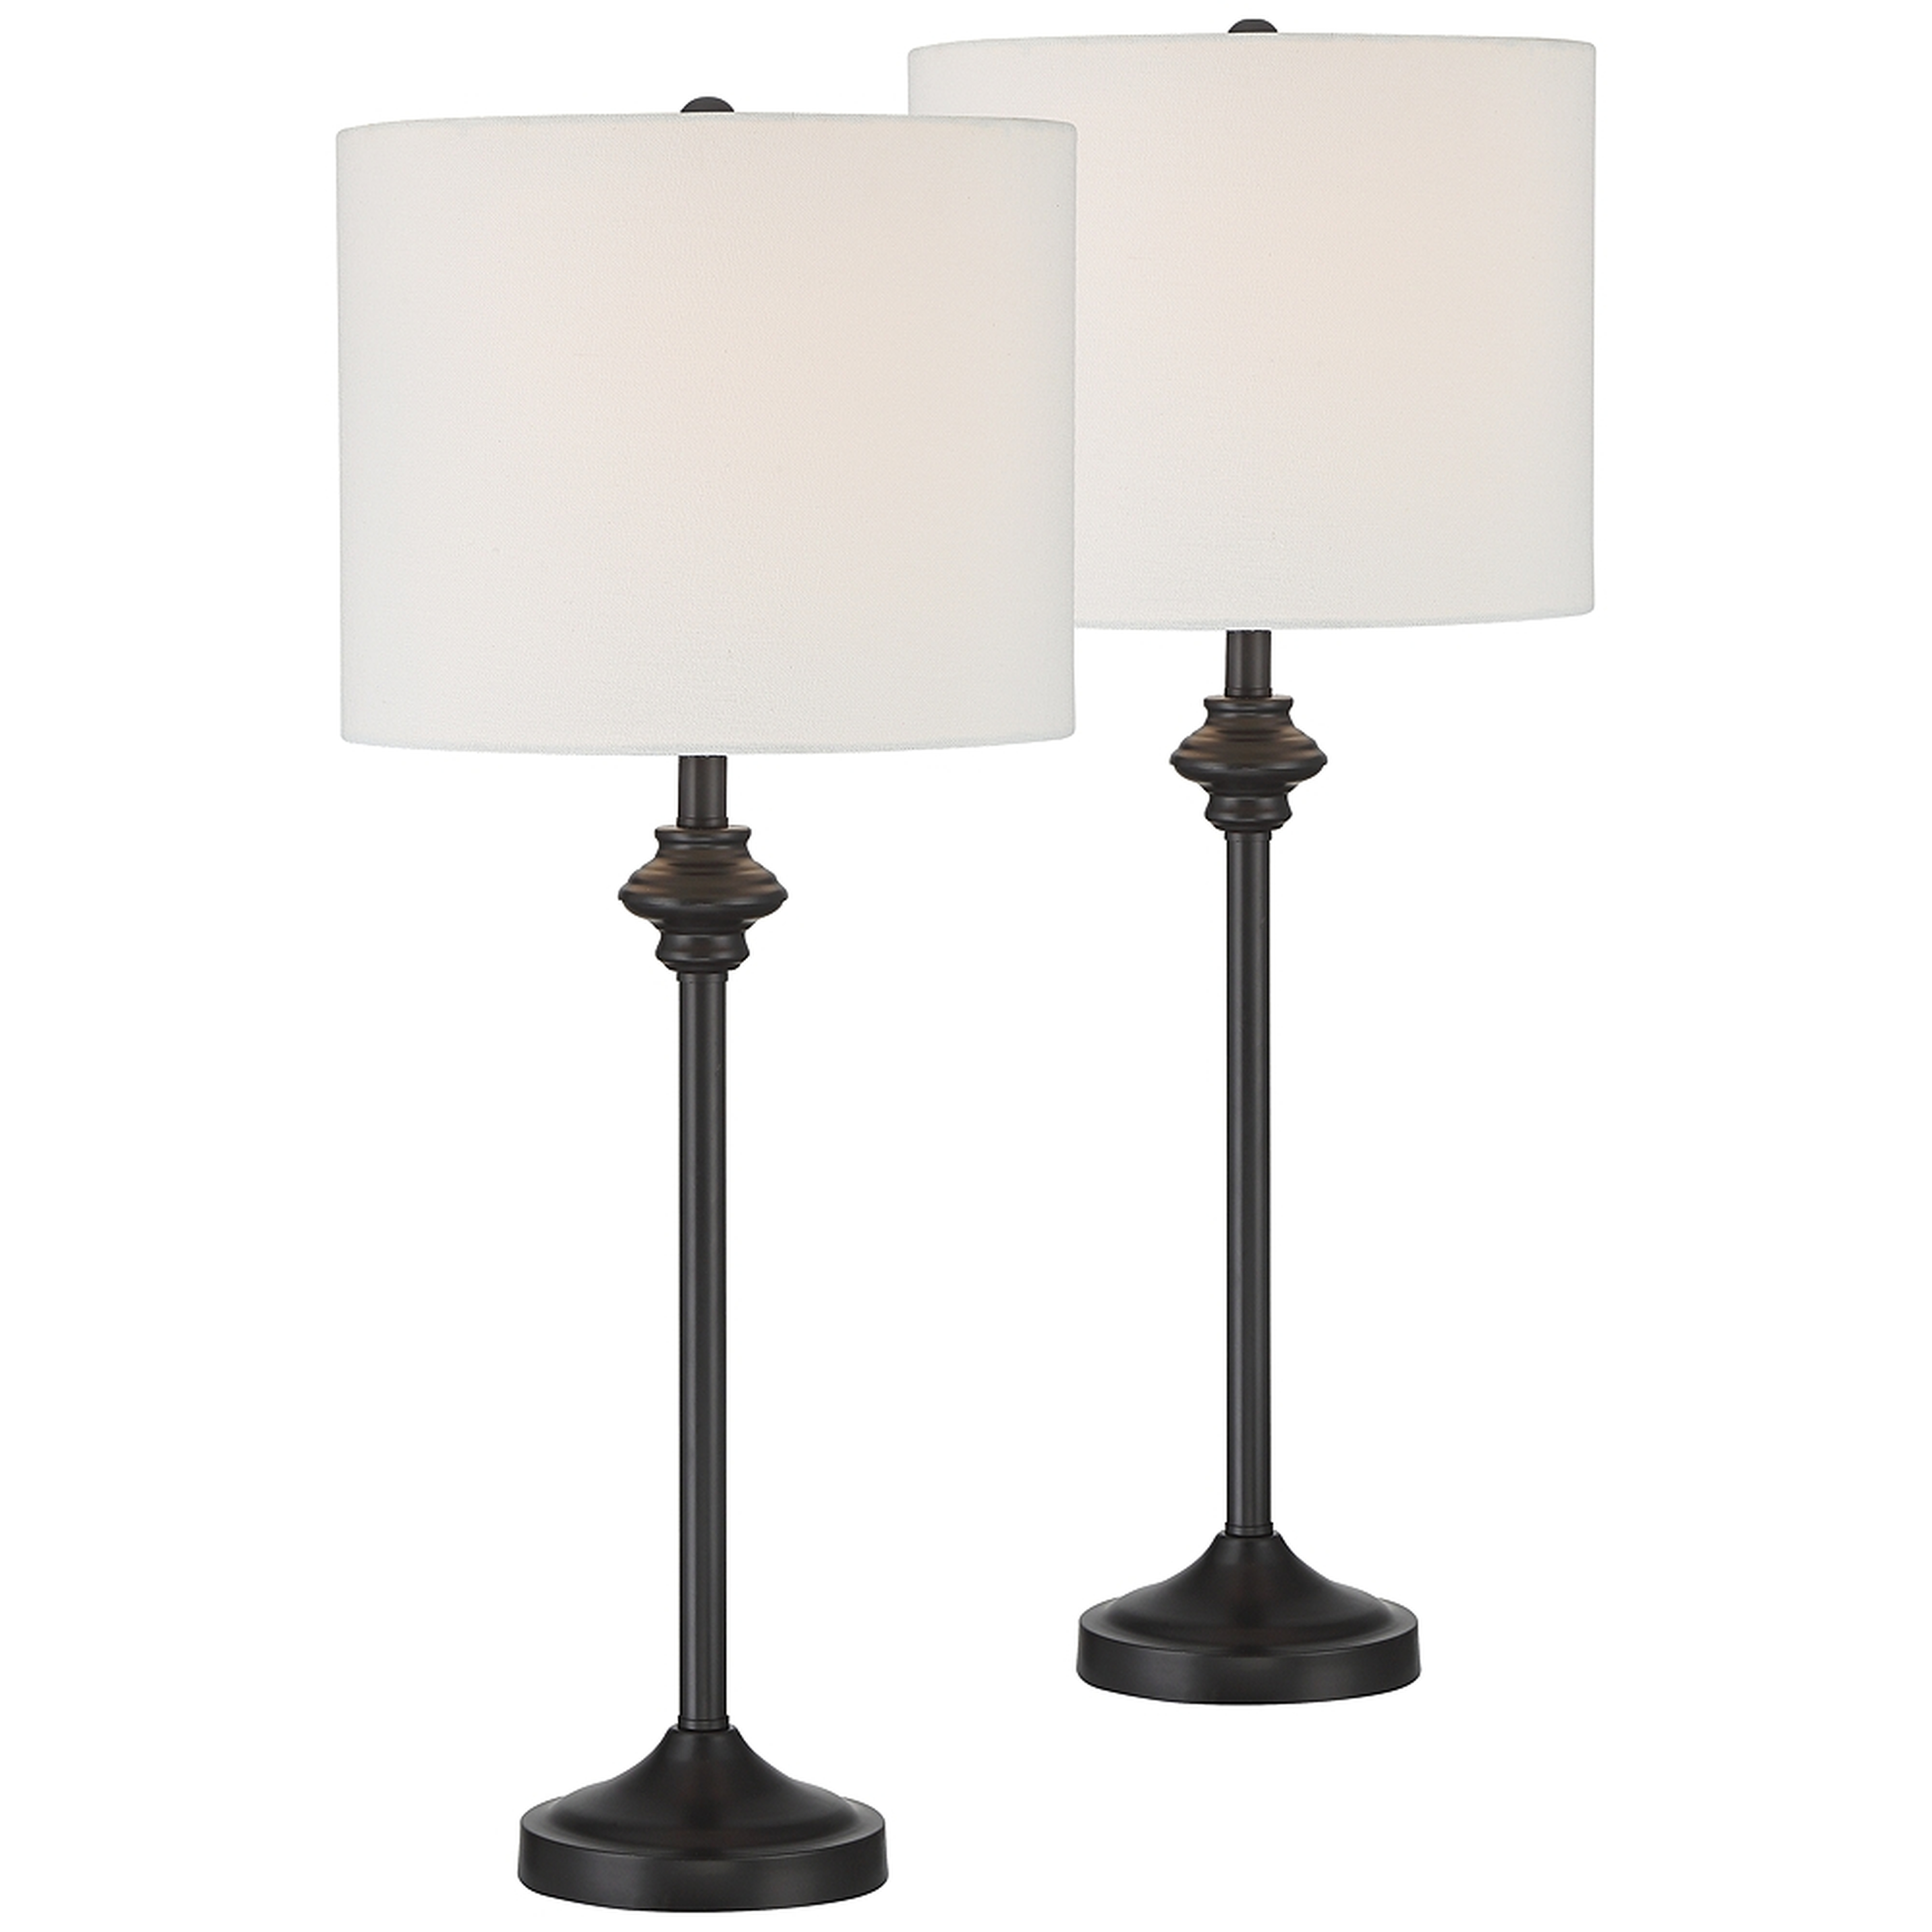 Lynn Black Buffet Table Lamps Set of 2 - Style # 67Y78 - Lamps Plus